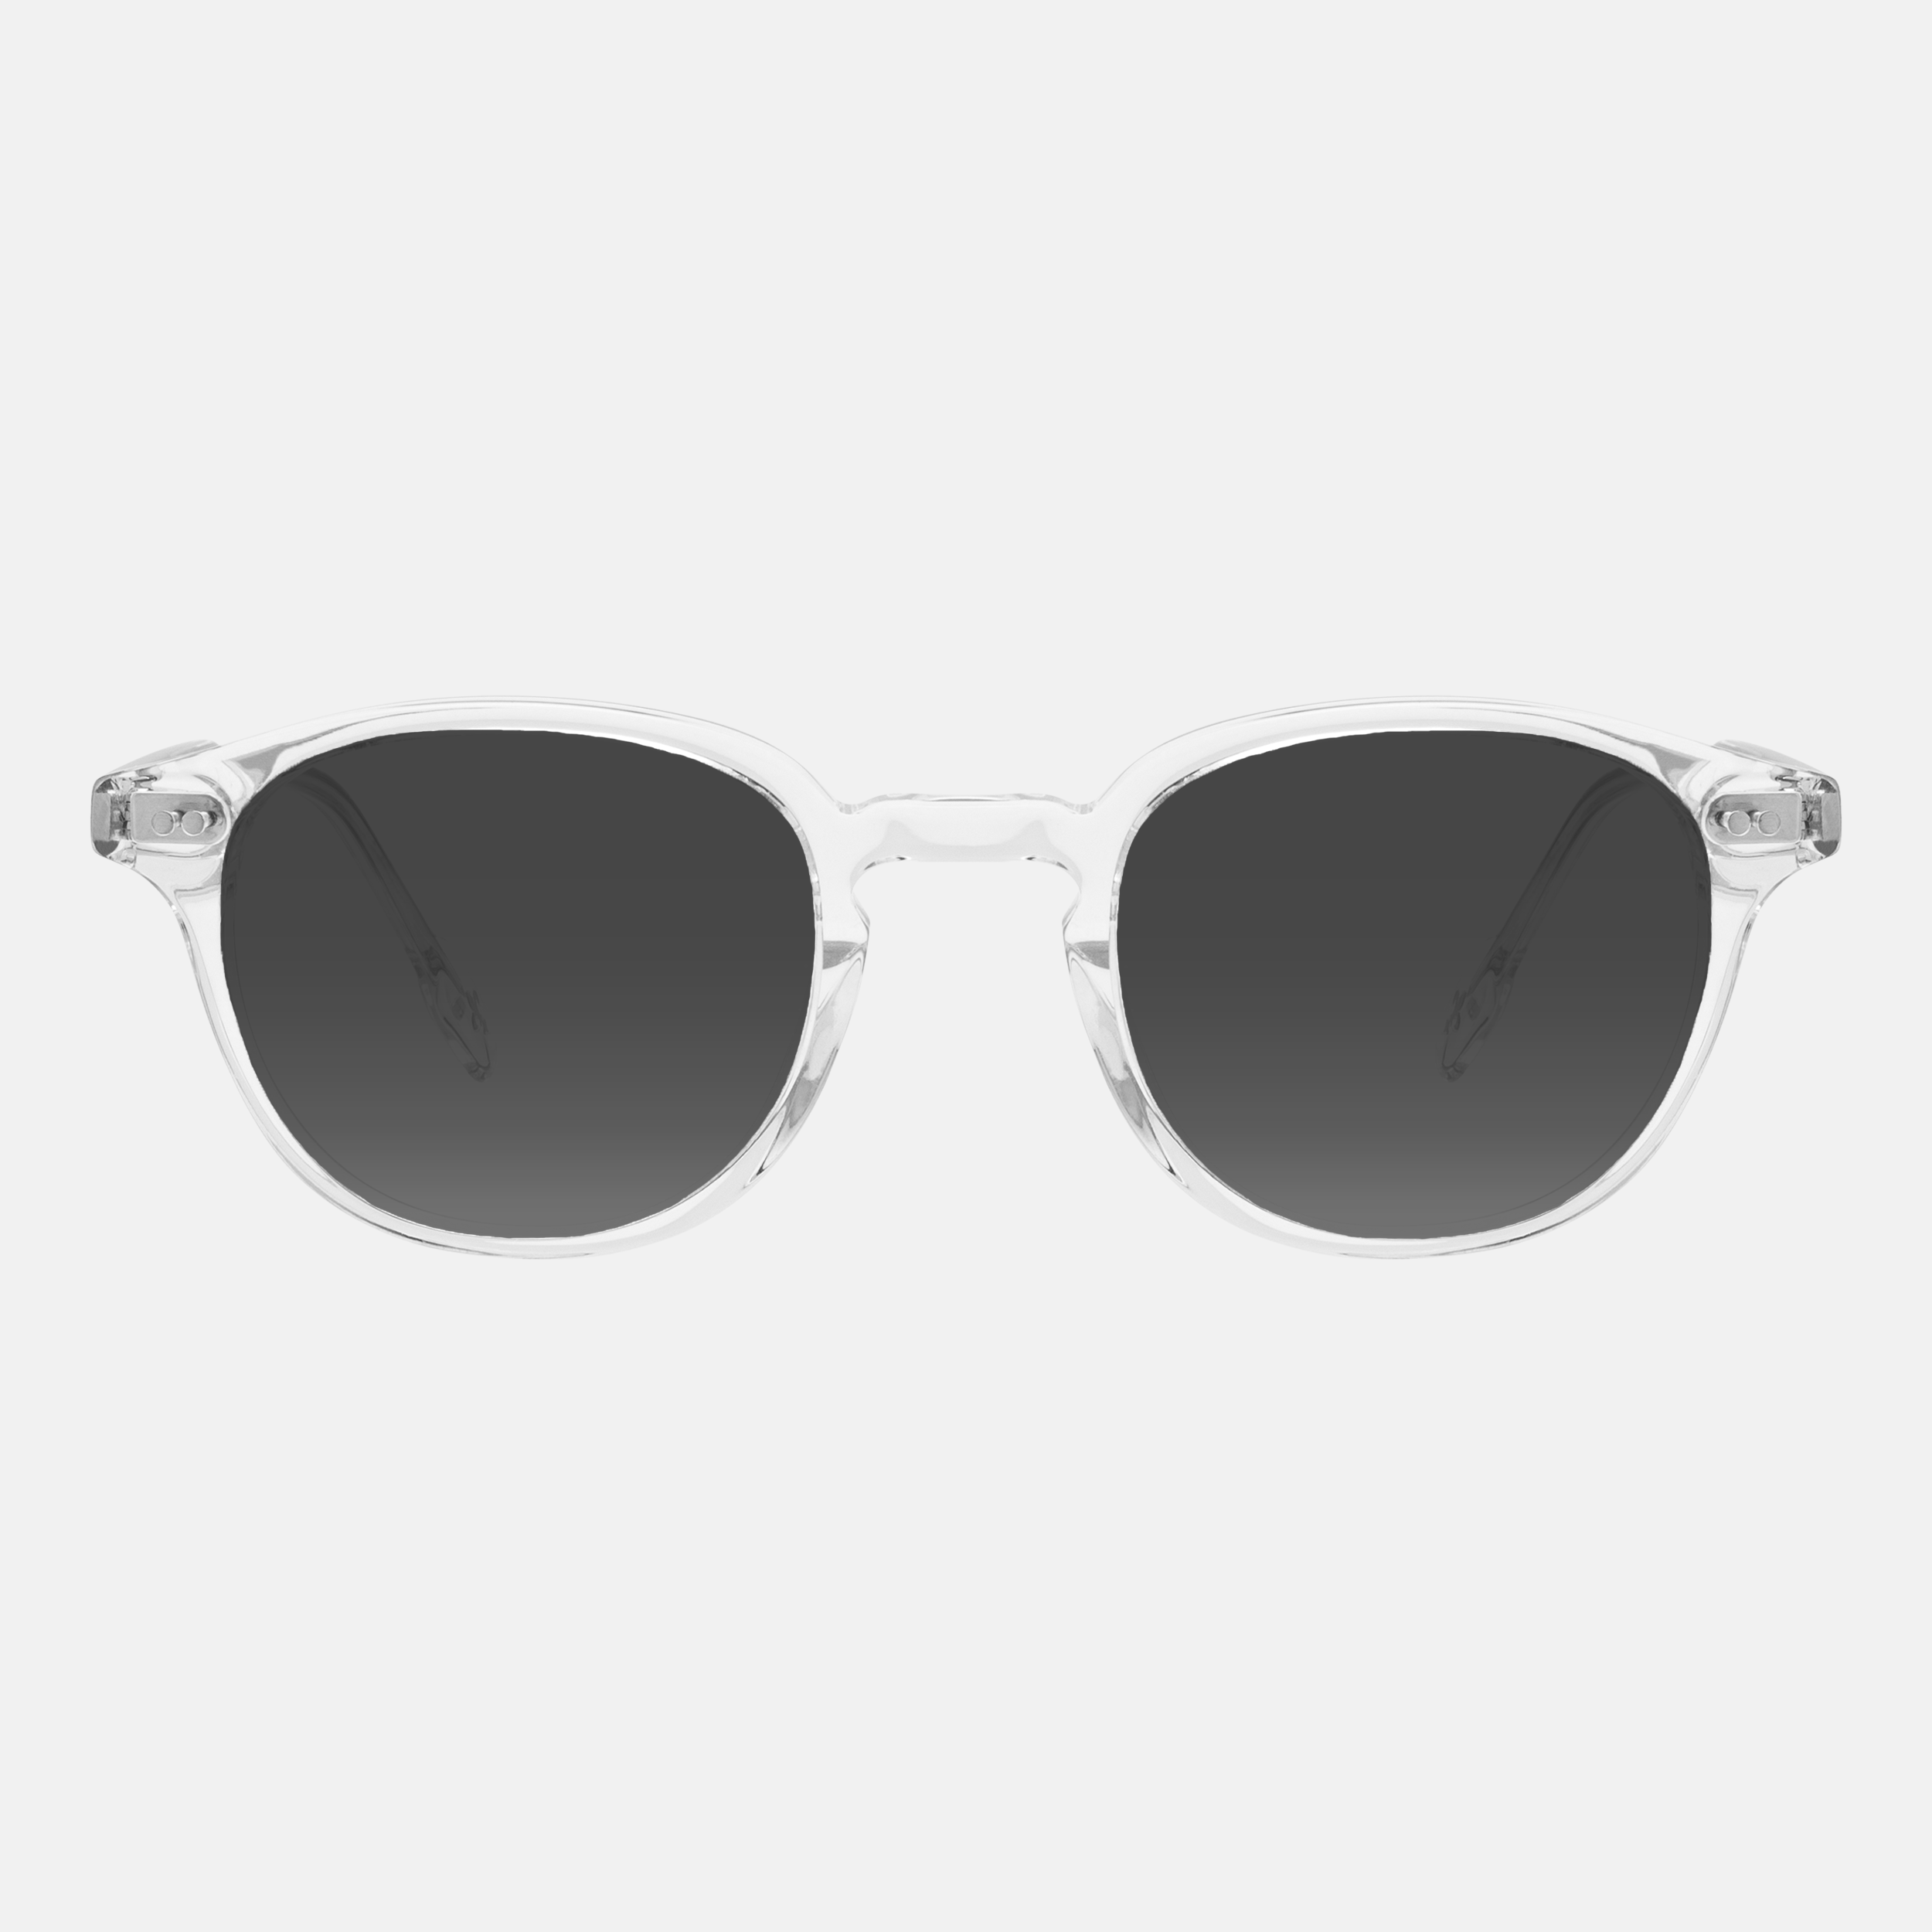 Haussmann Original Sunglasses | Signature